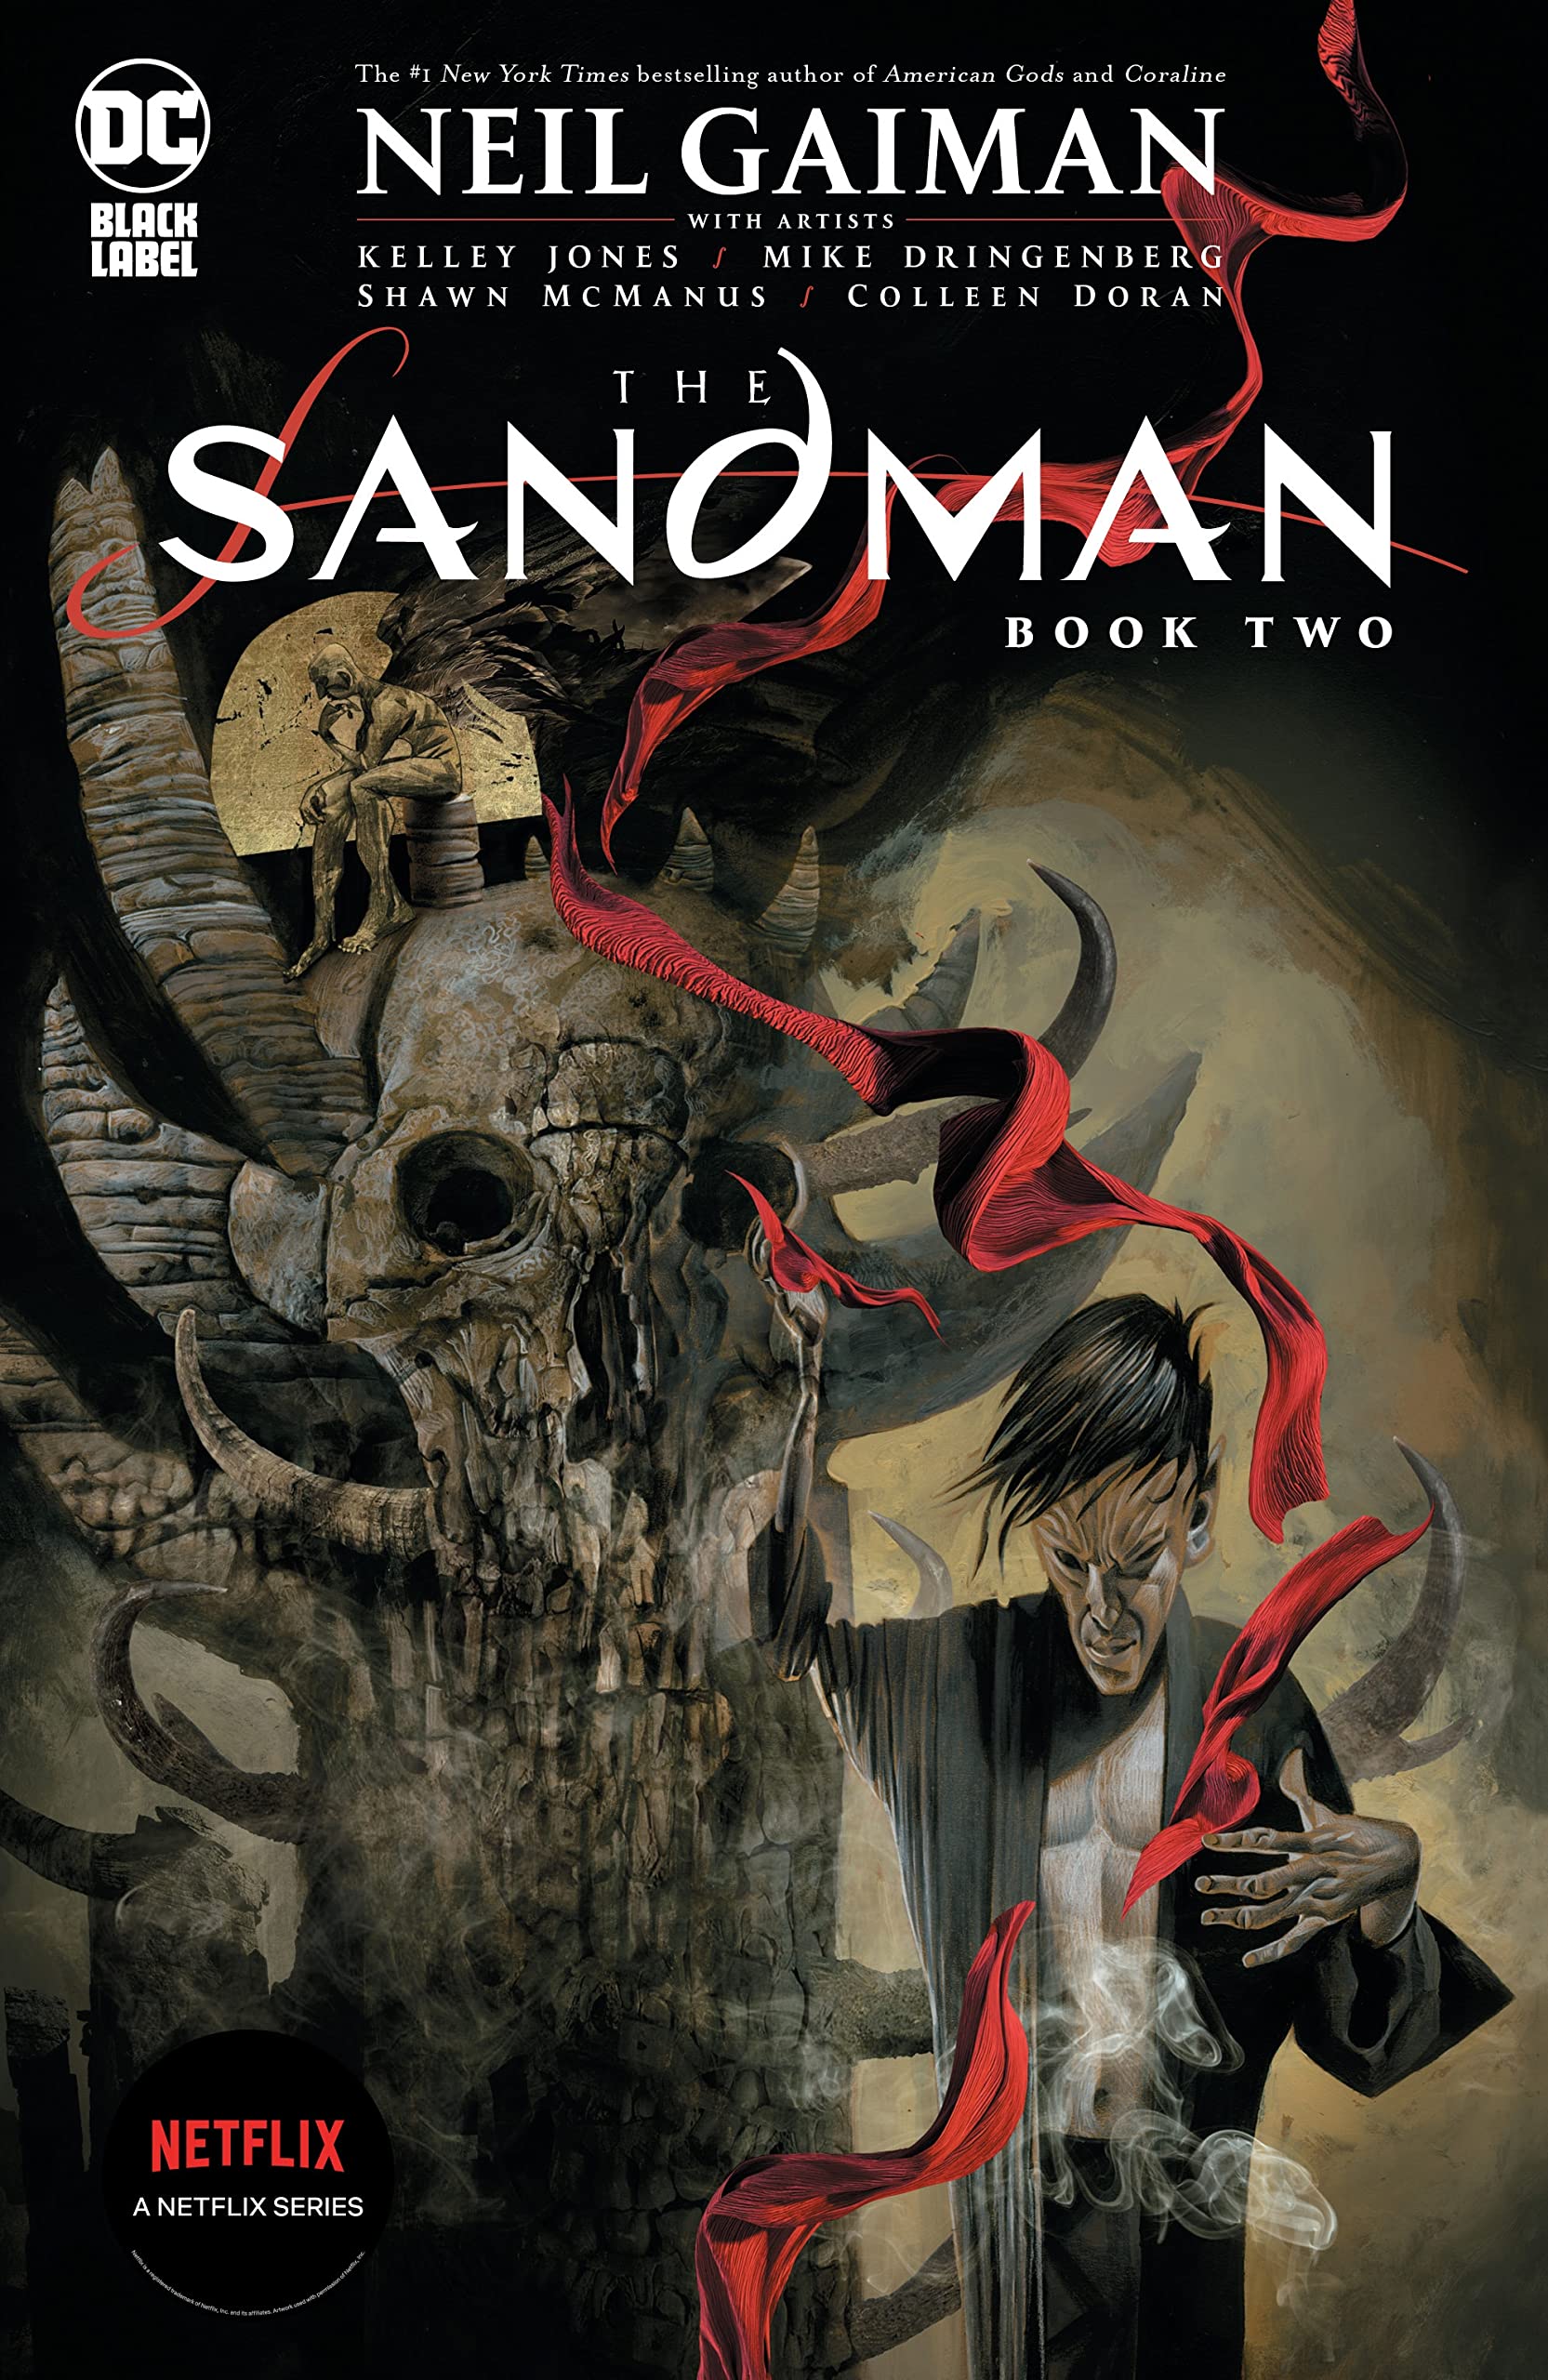 The Sandman: Book Two by Neil Gaiman